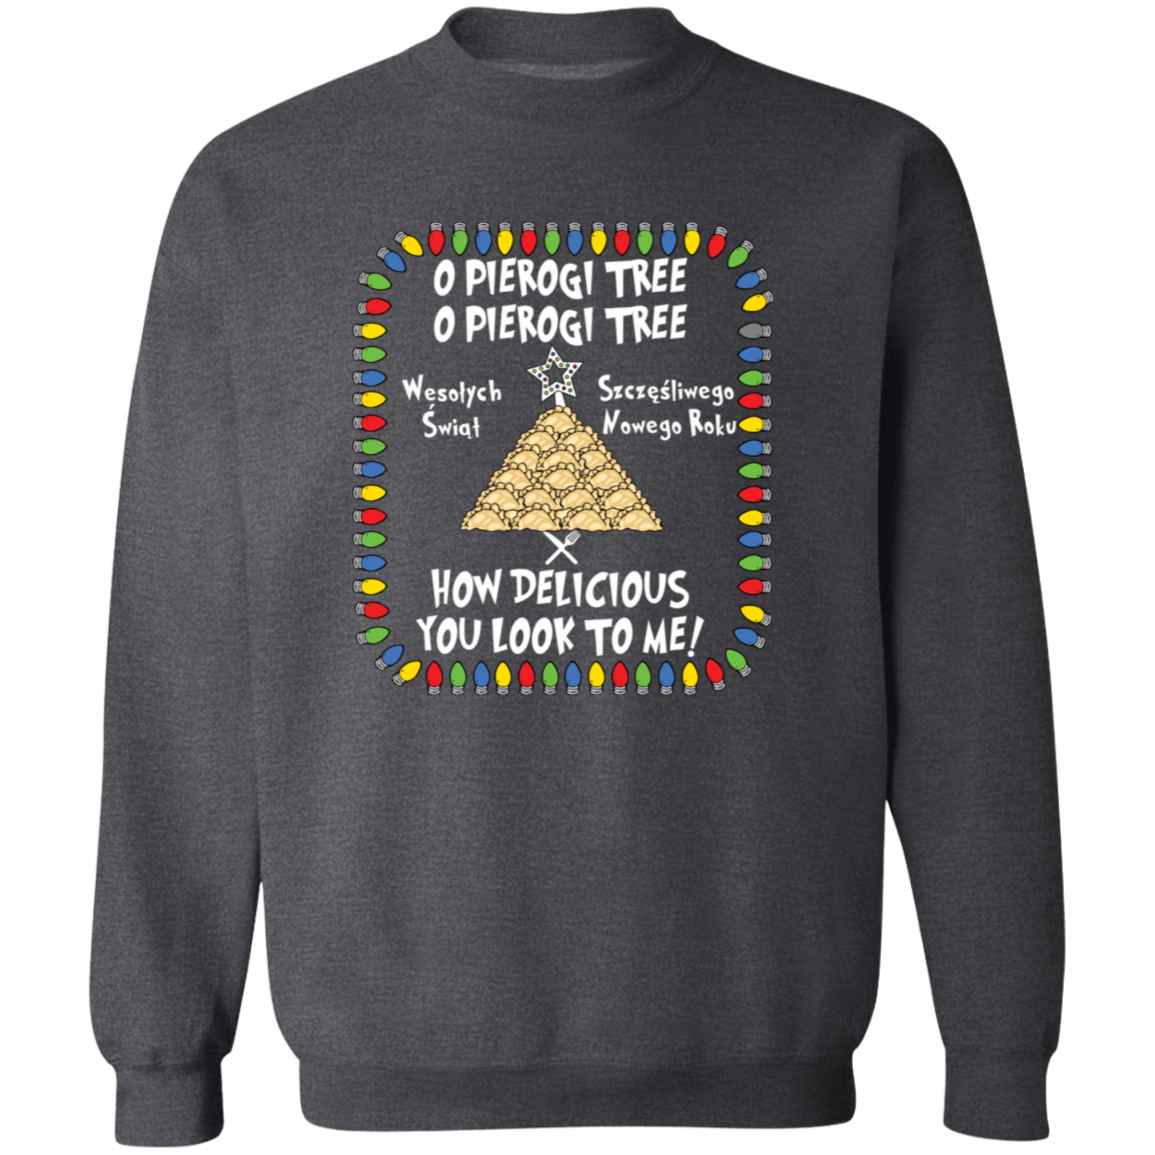 O Pierogi Tree Sweatshirt - How Delicious You Look To Me Sweatshirts CustomCat Dark Heather S 